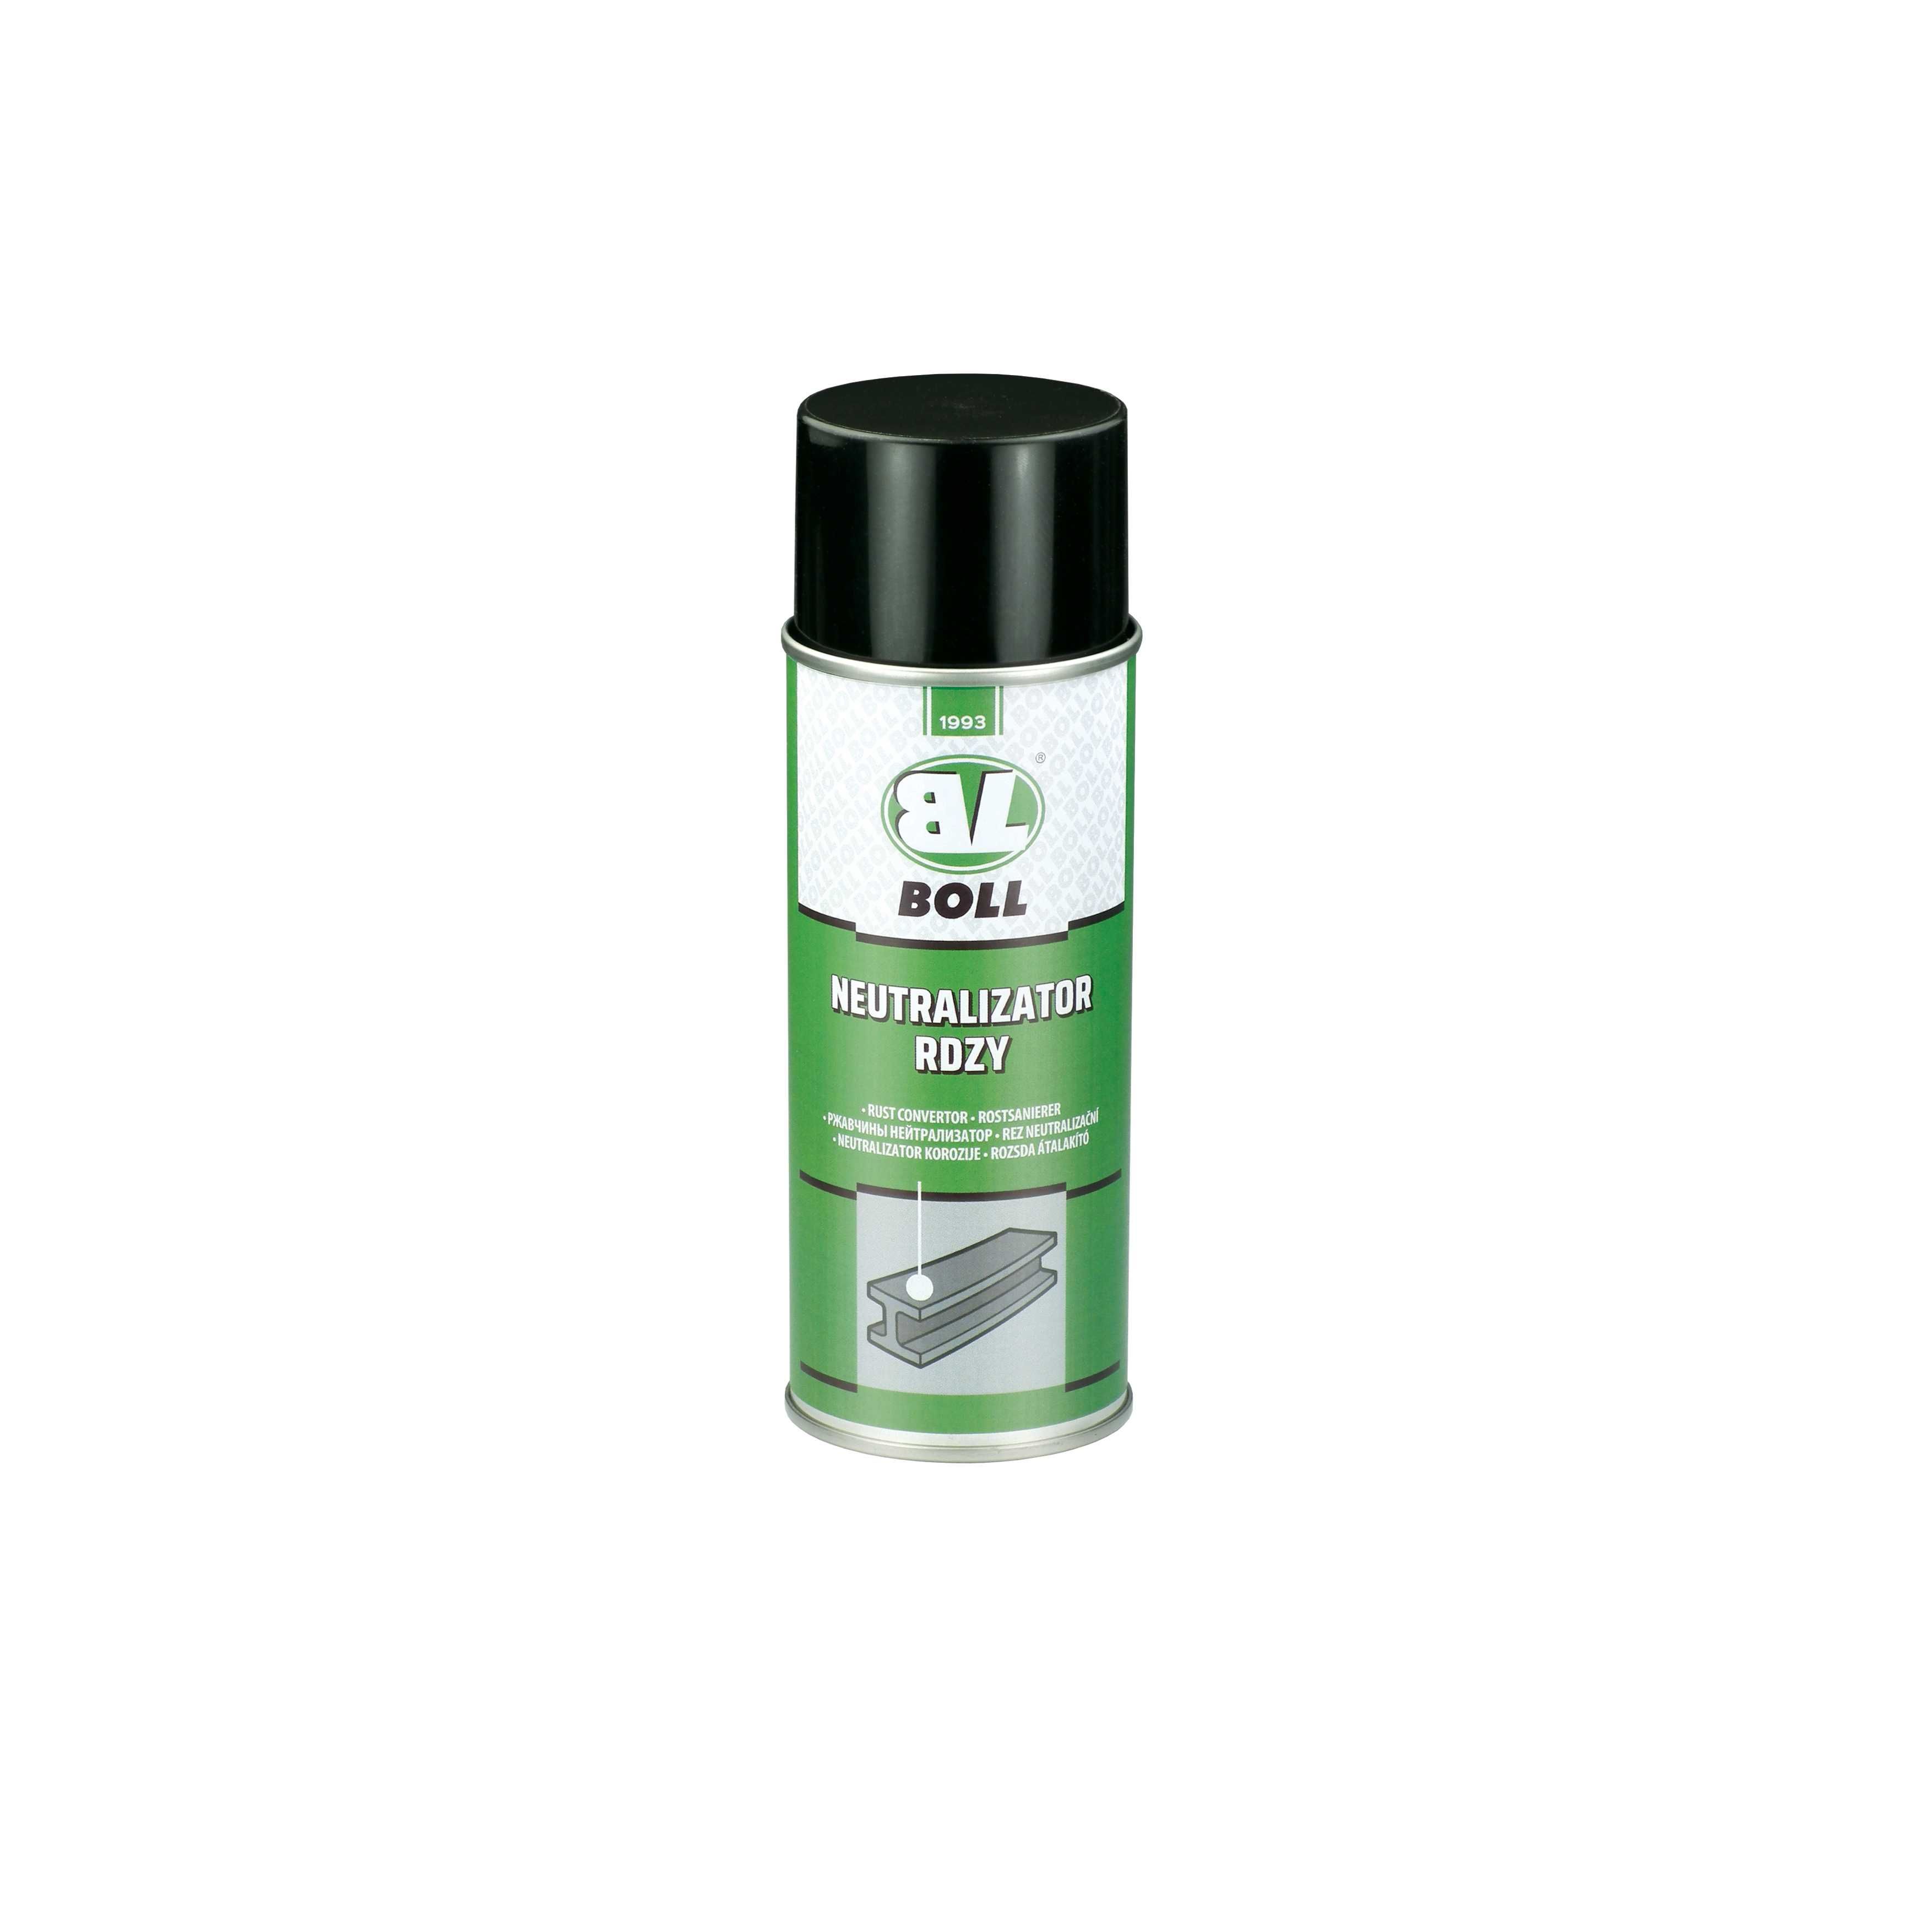 BOLL neutralizator rdzy spray 400 ml